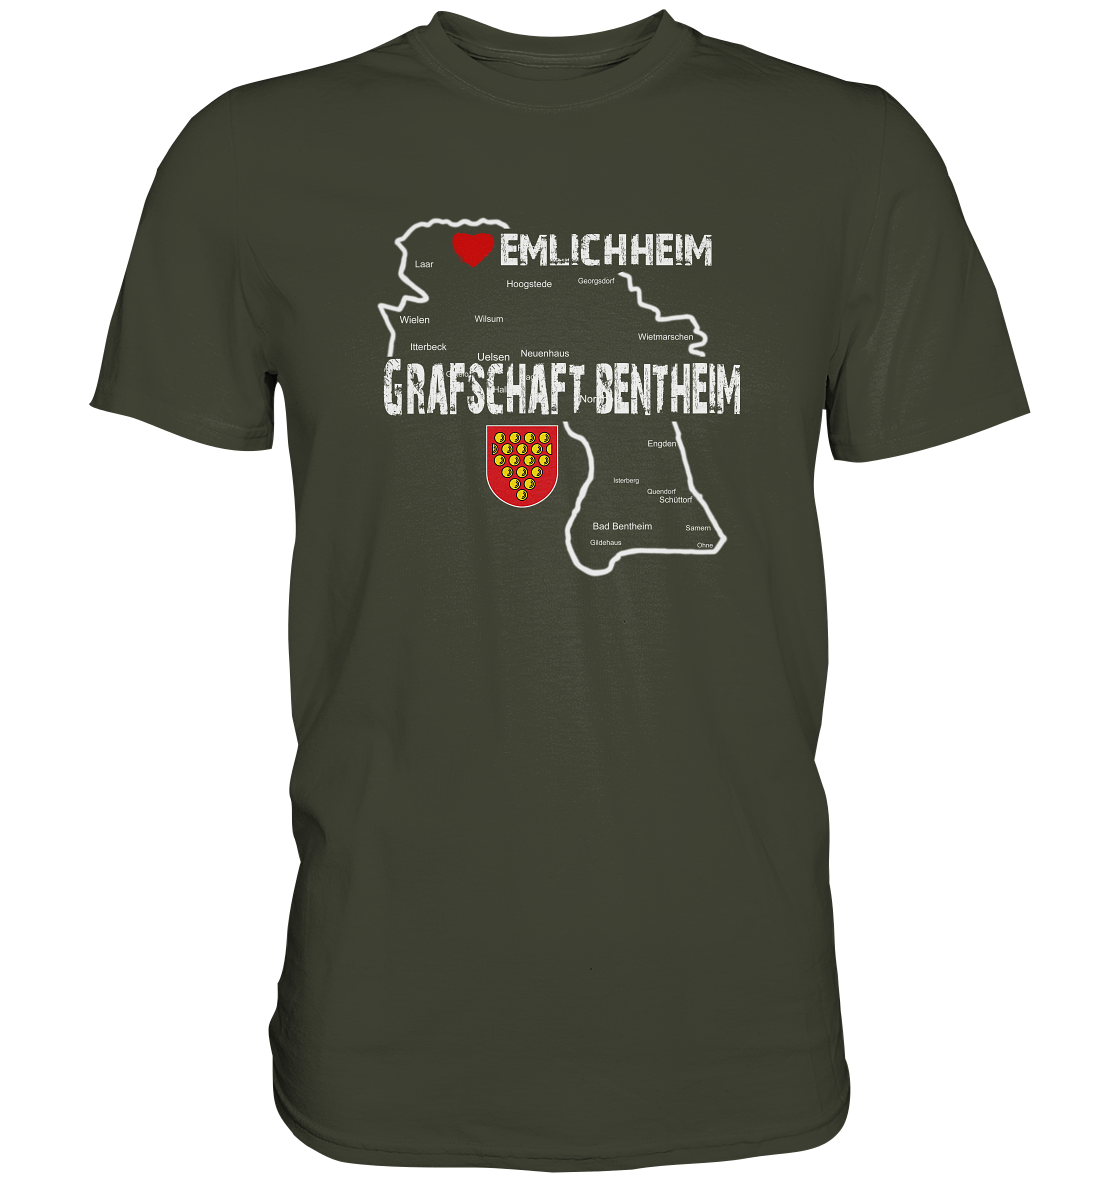 Hometown Shirt "Emlichheim" - Premium Shirt